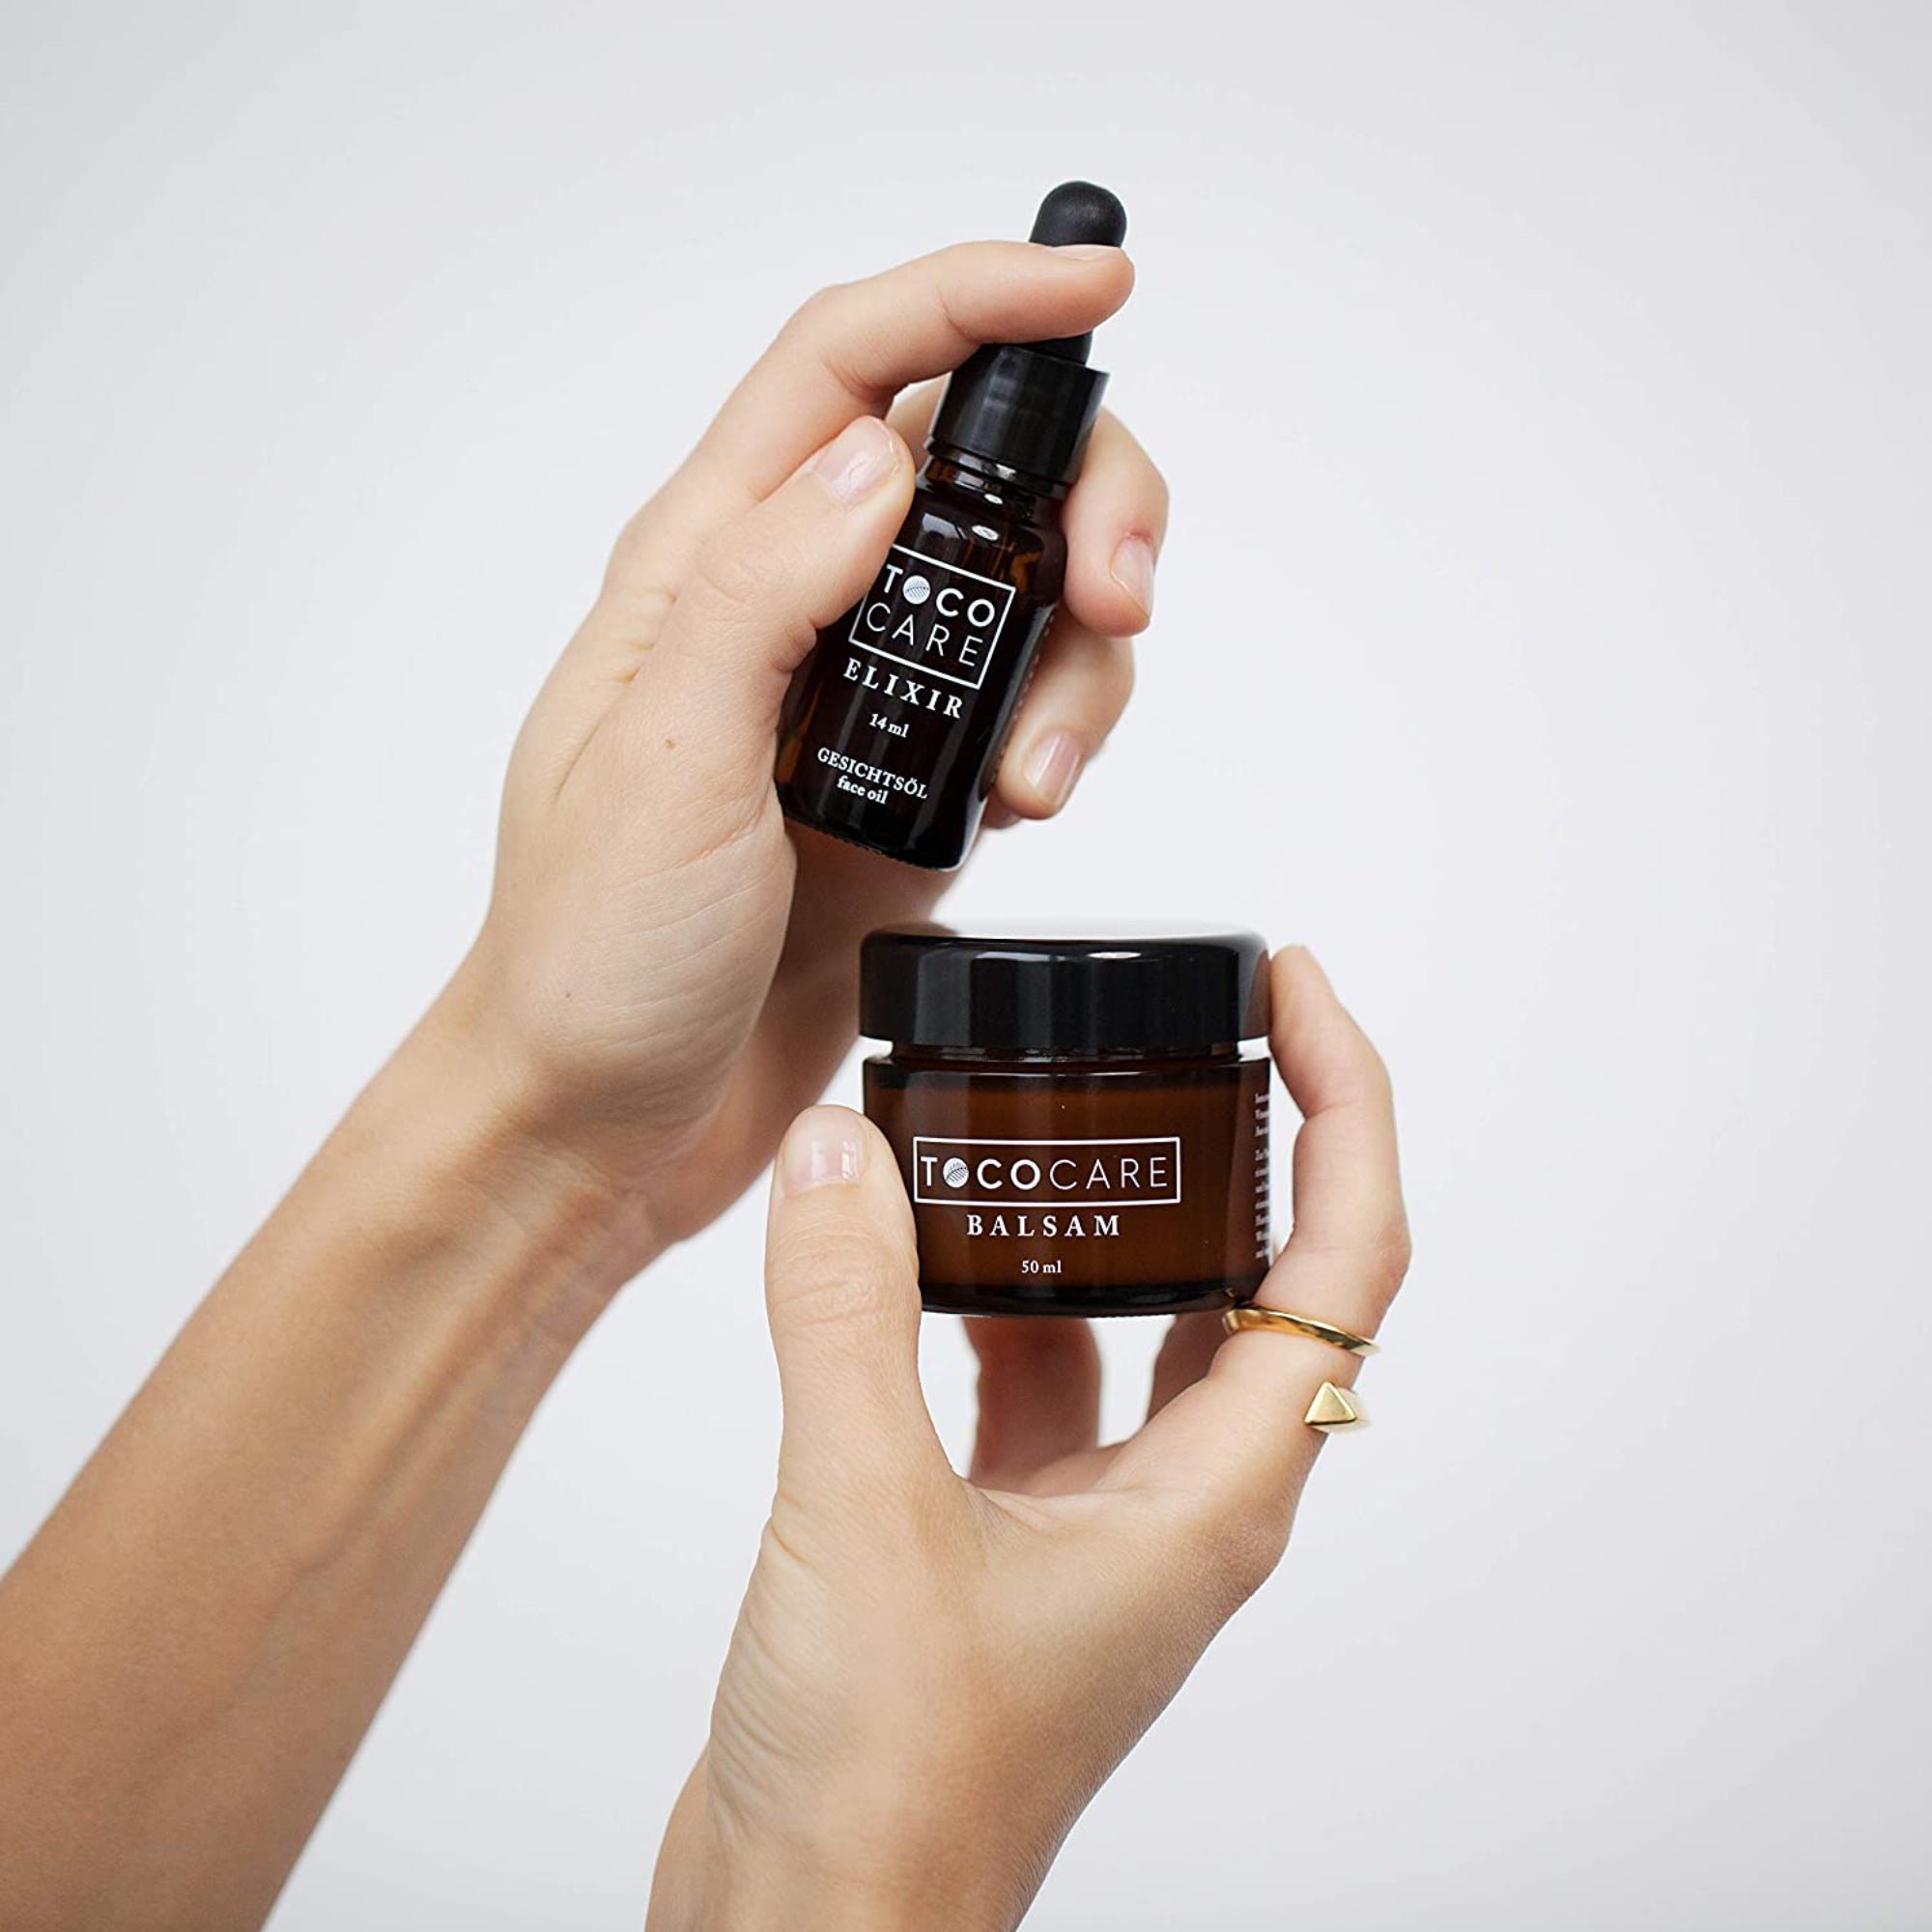 Elixir - the skin oil for daily facial care